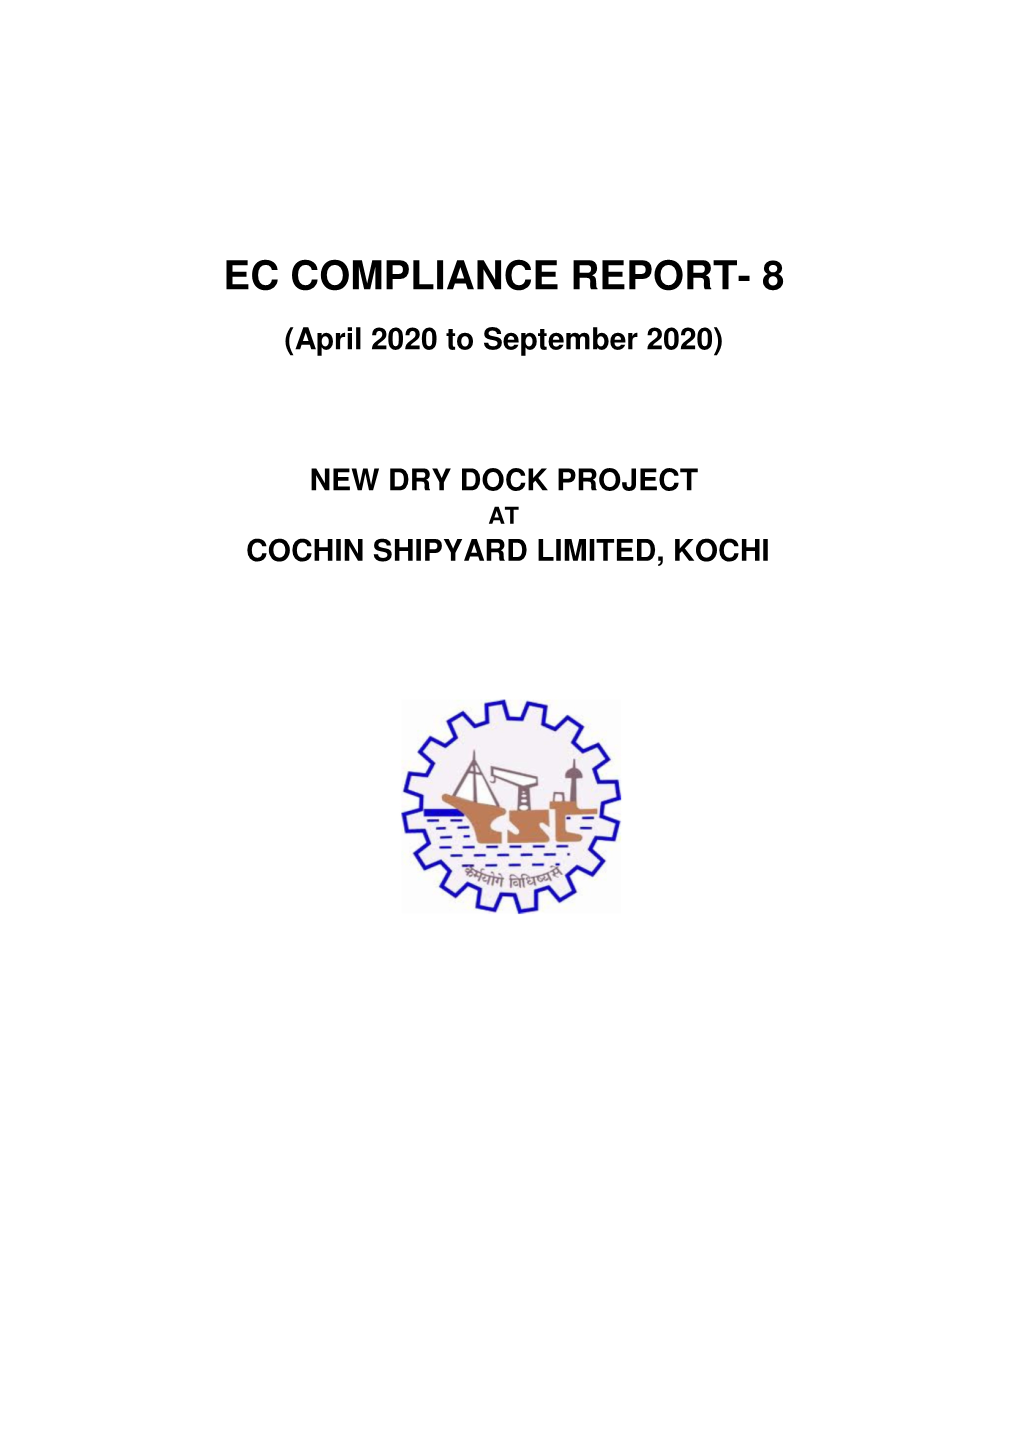 EC COMPLIANCE REPORT- 8 (April 2020 to September 2020)